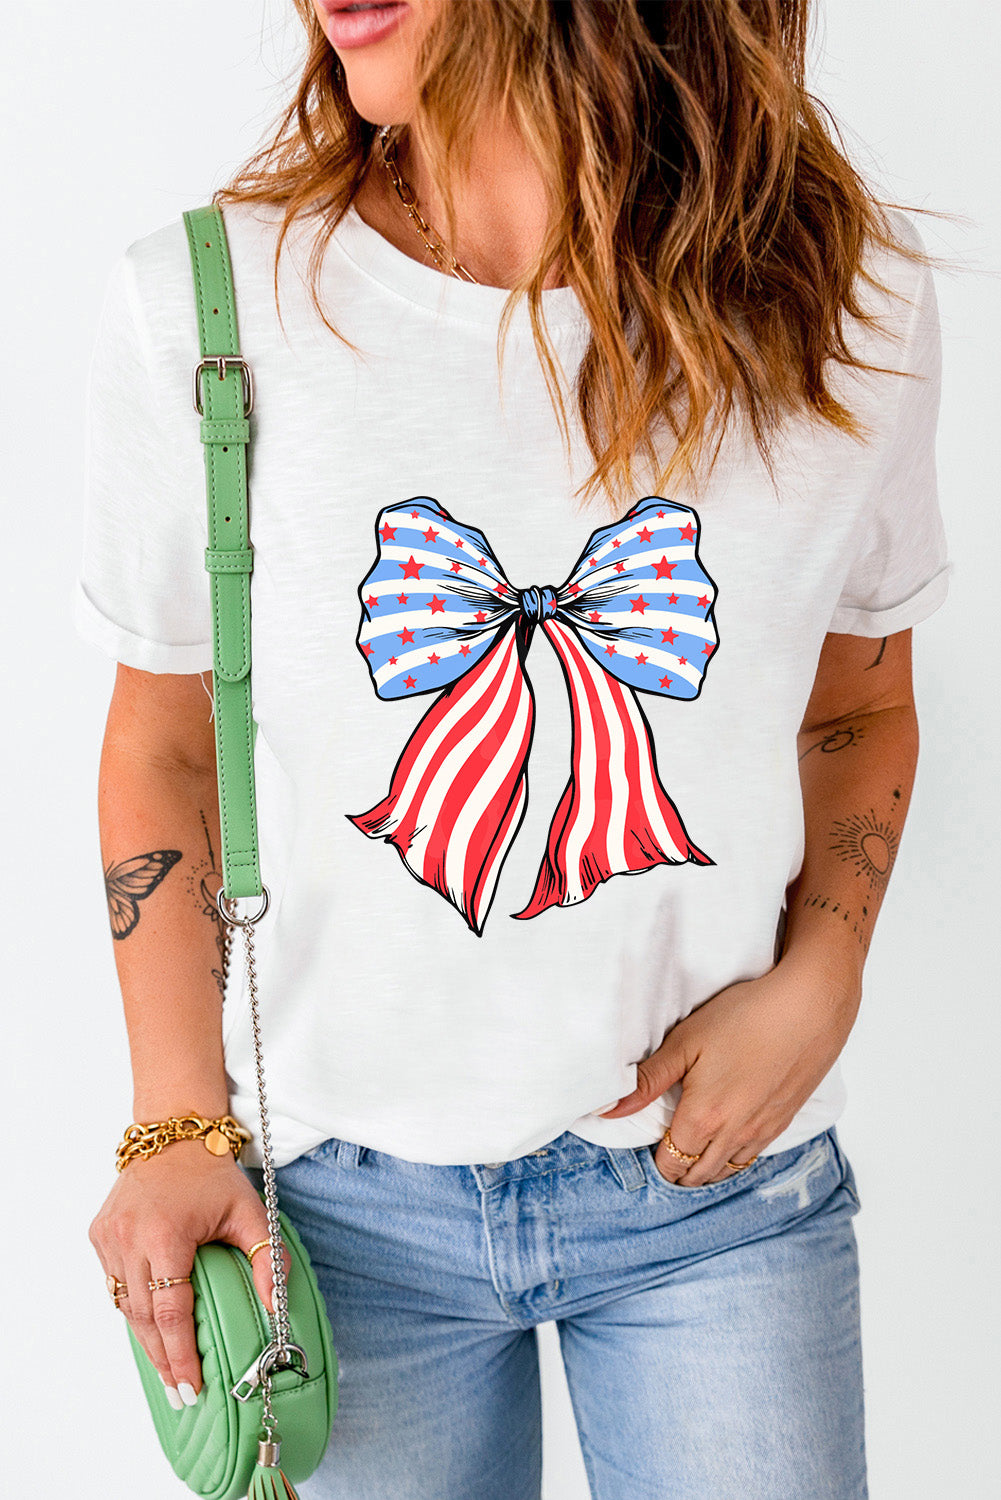 Bow Flag Patriotic Women's Short Sleeve Graphic T-Shirt